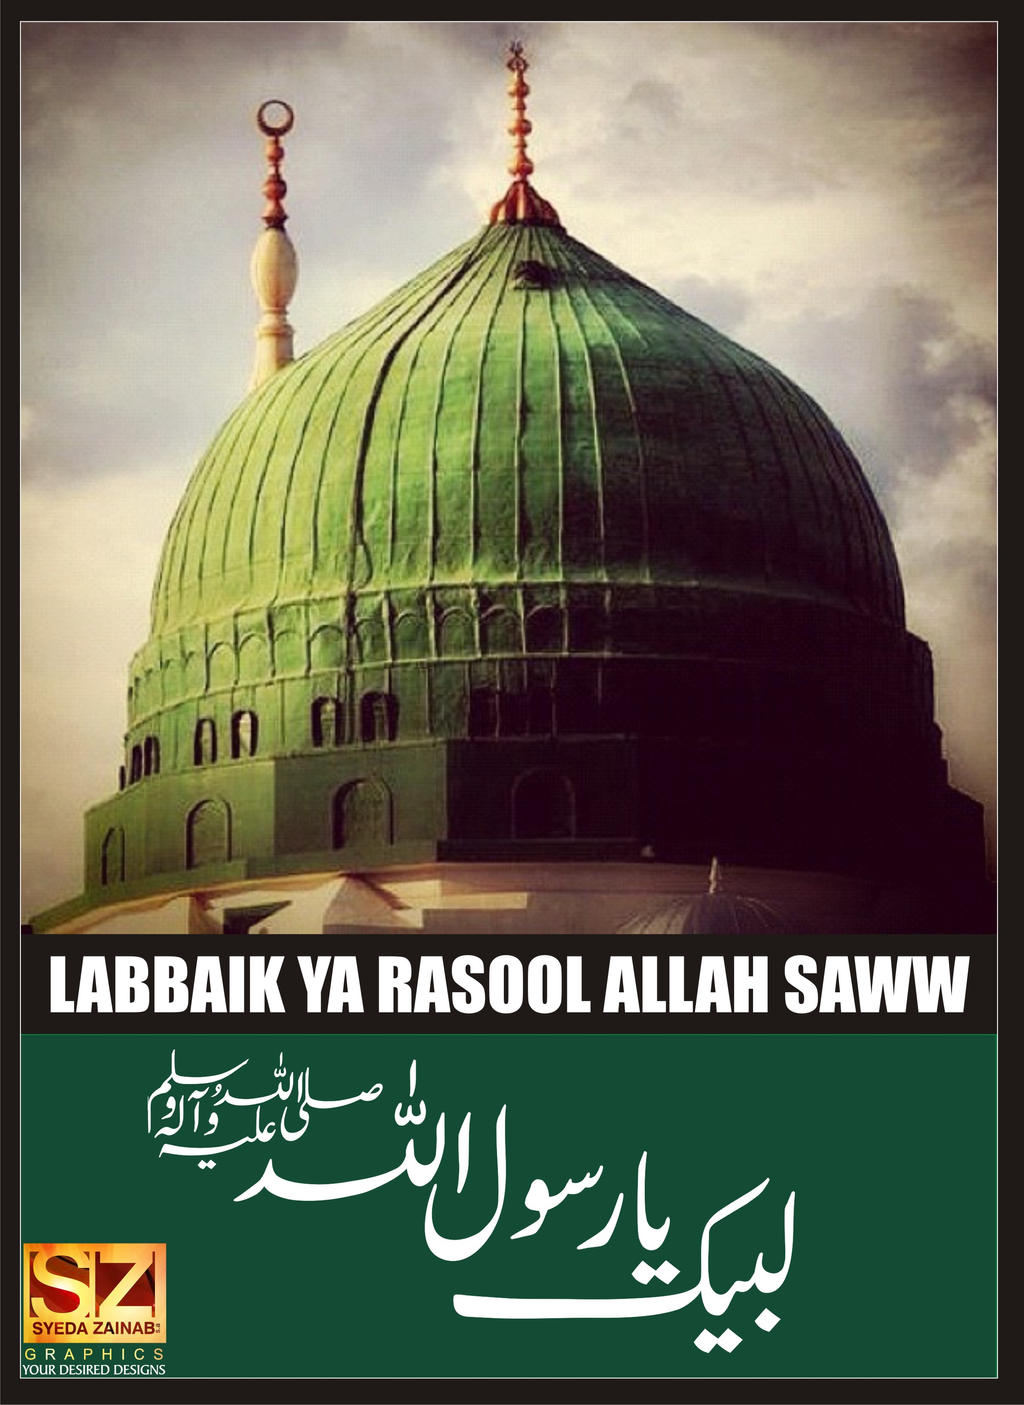 Labbaik Ya Rasool Allah saww by syedazainab-sa on DeviantArt